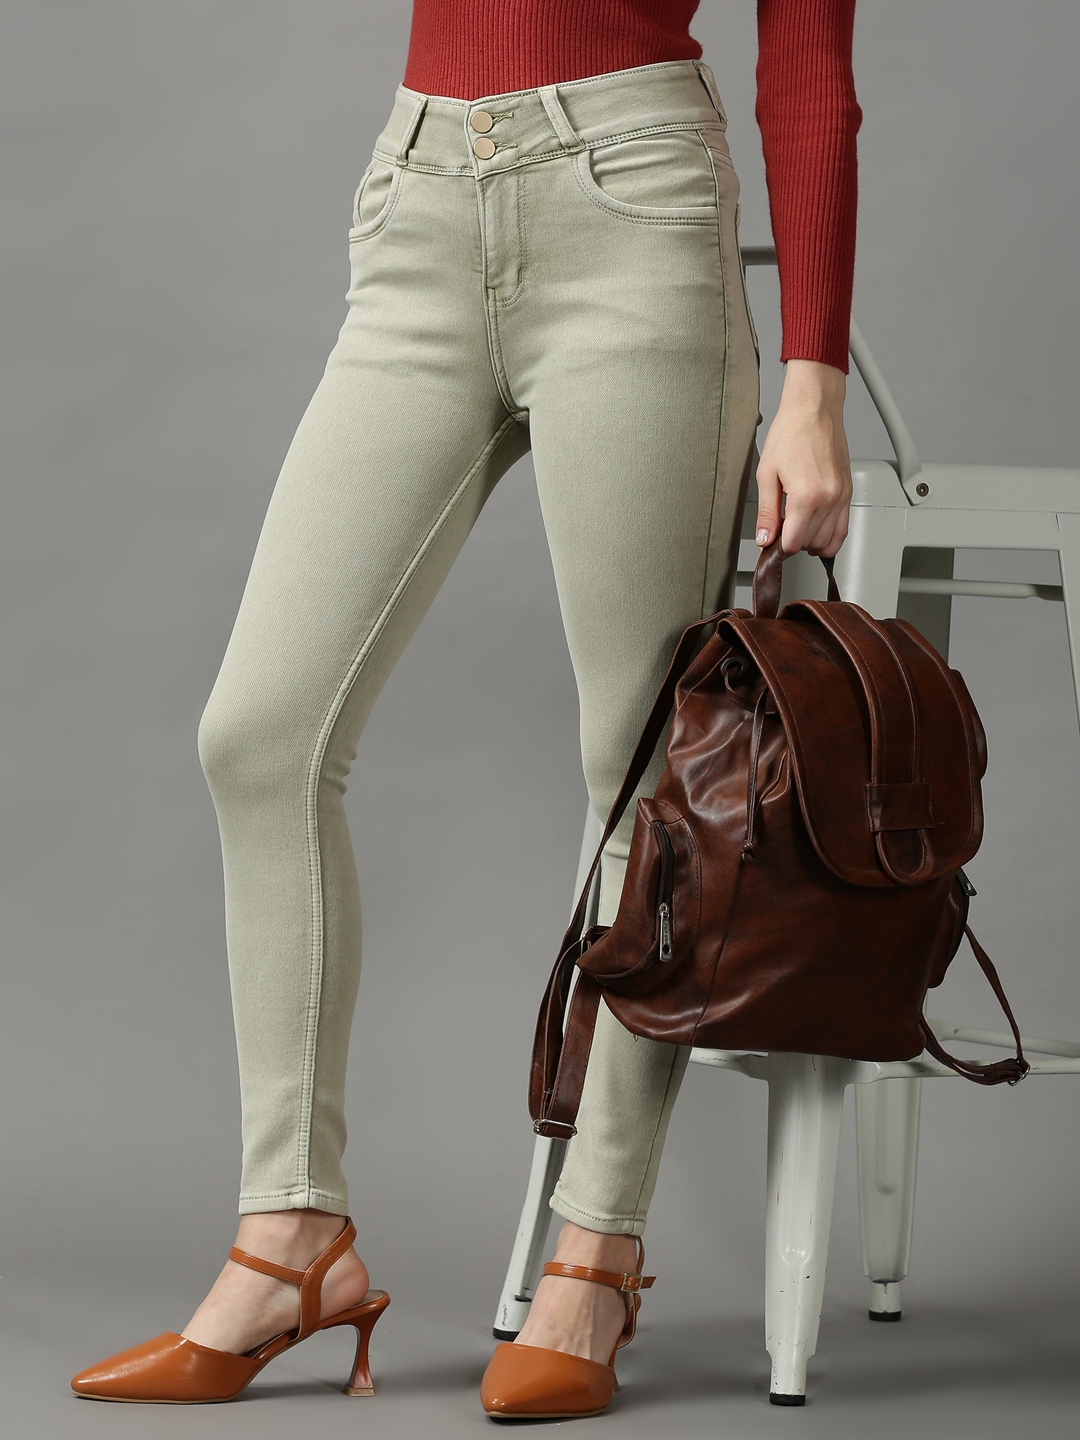 SHOWOFF Women's Clean Look Skinny Fit Green Denim Jeans